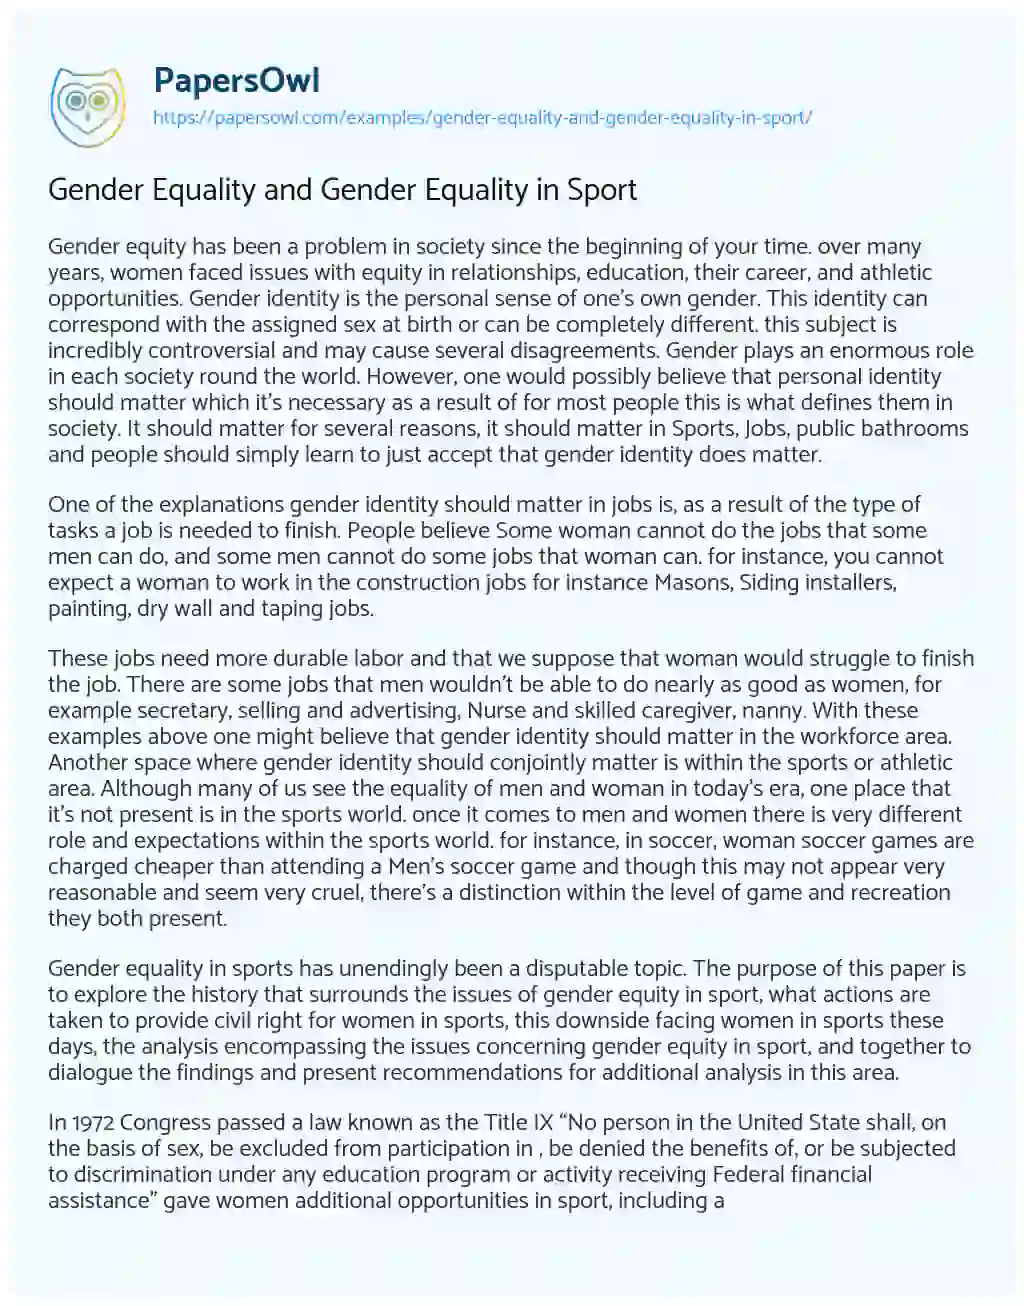 Essay on Gender Equality and Gender Equality in Sport